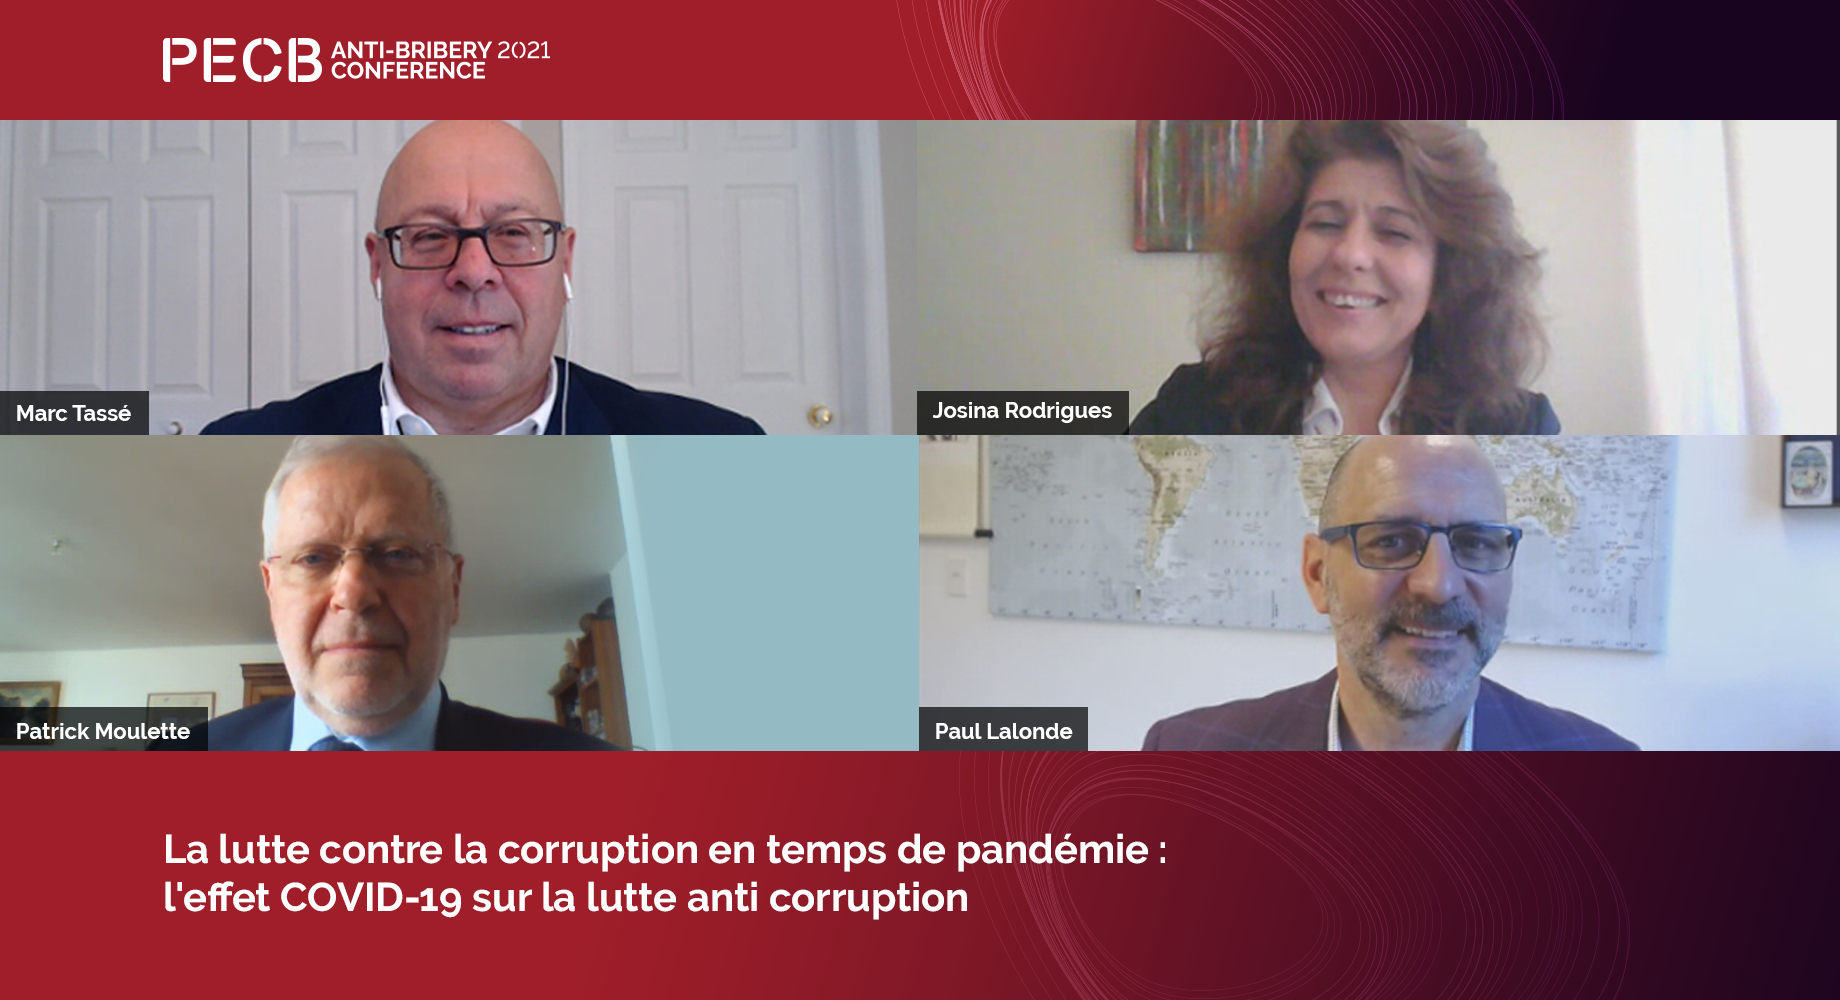 PECB Anti-Bribery Conference 2021